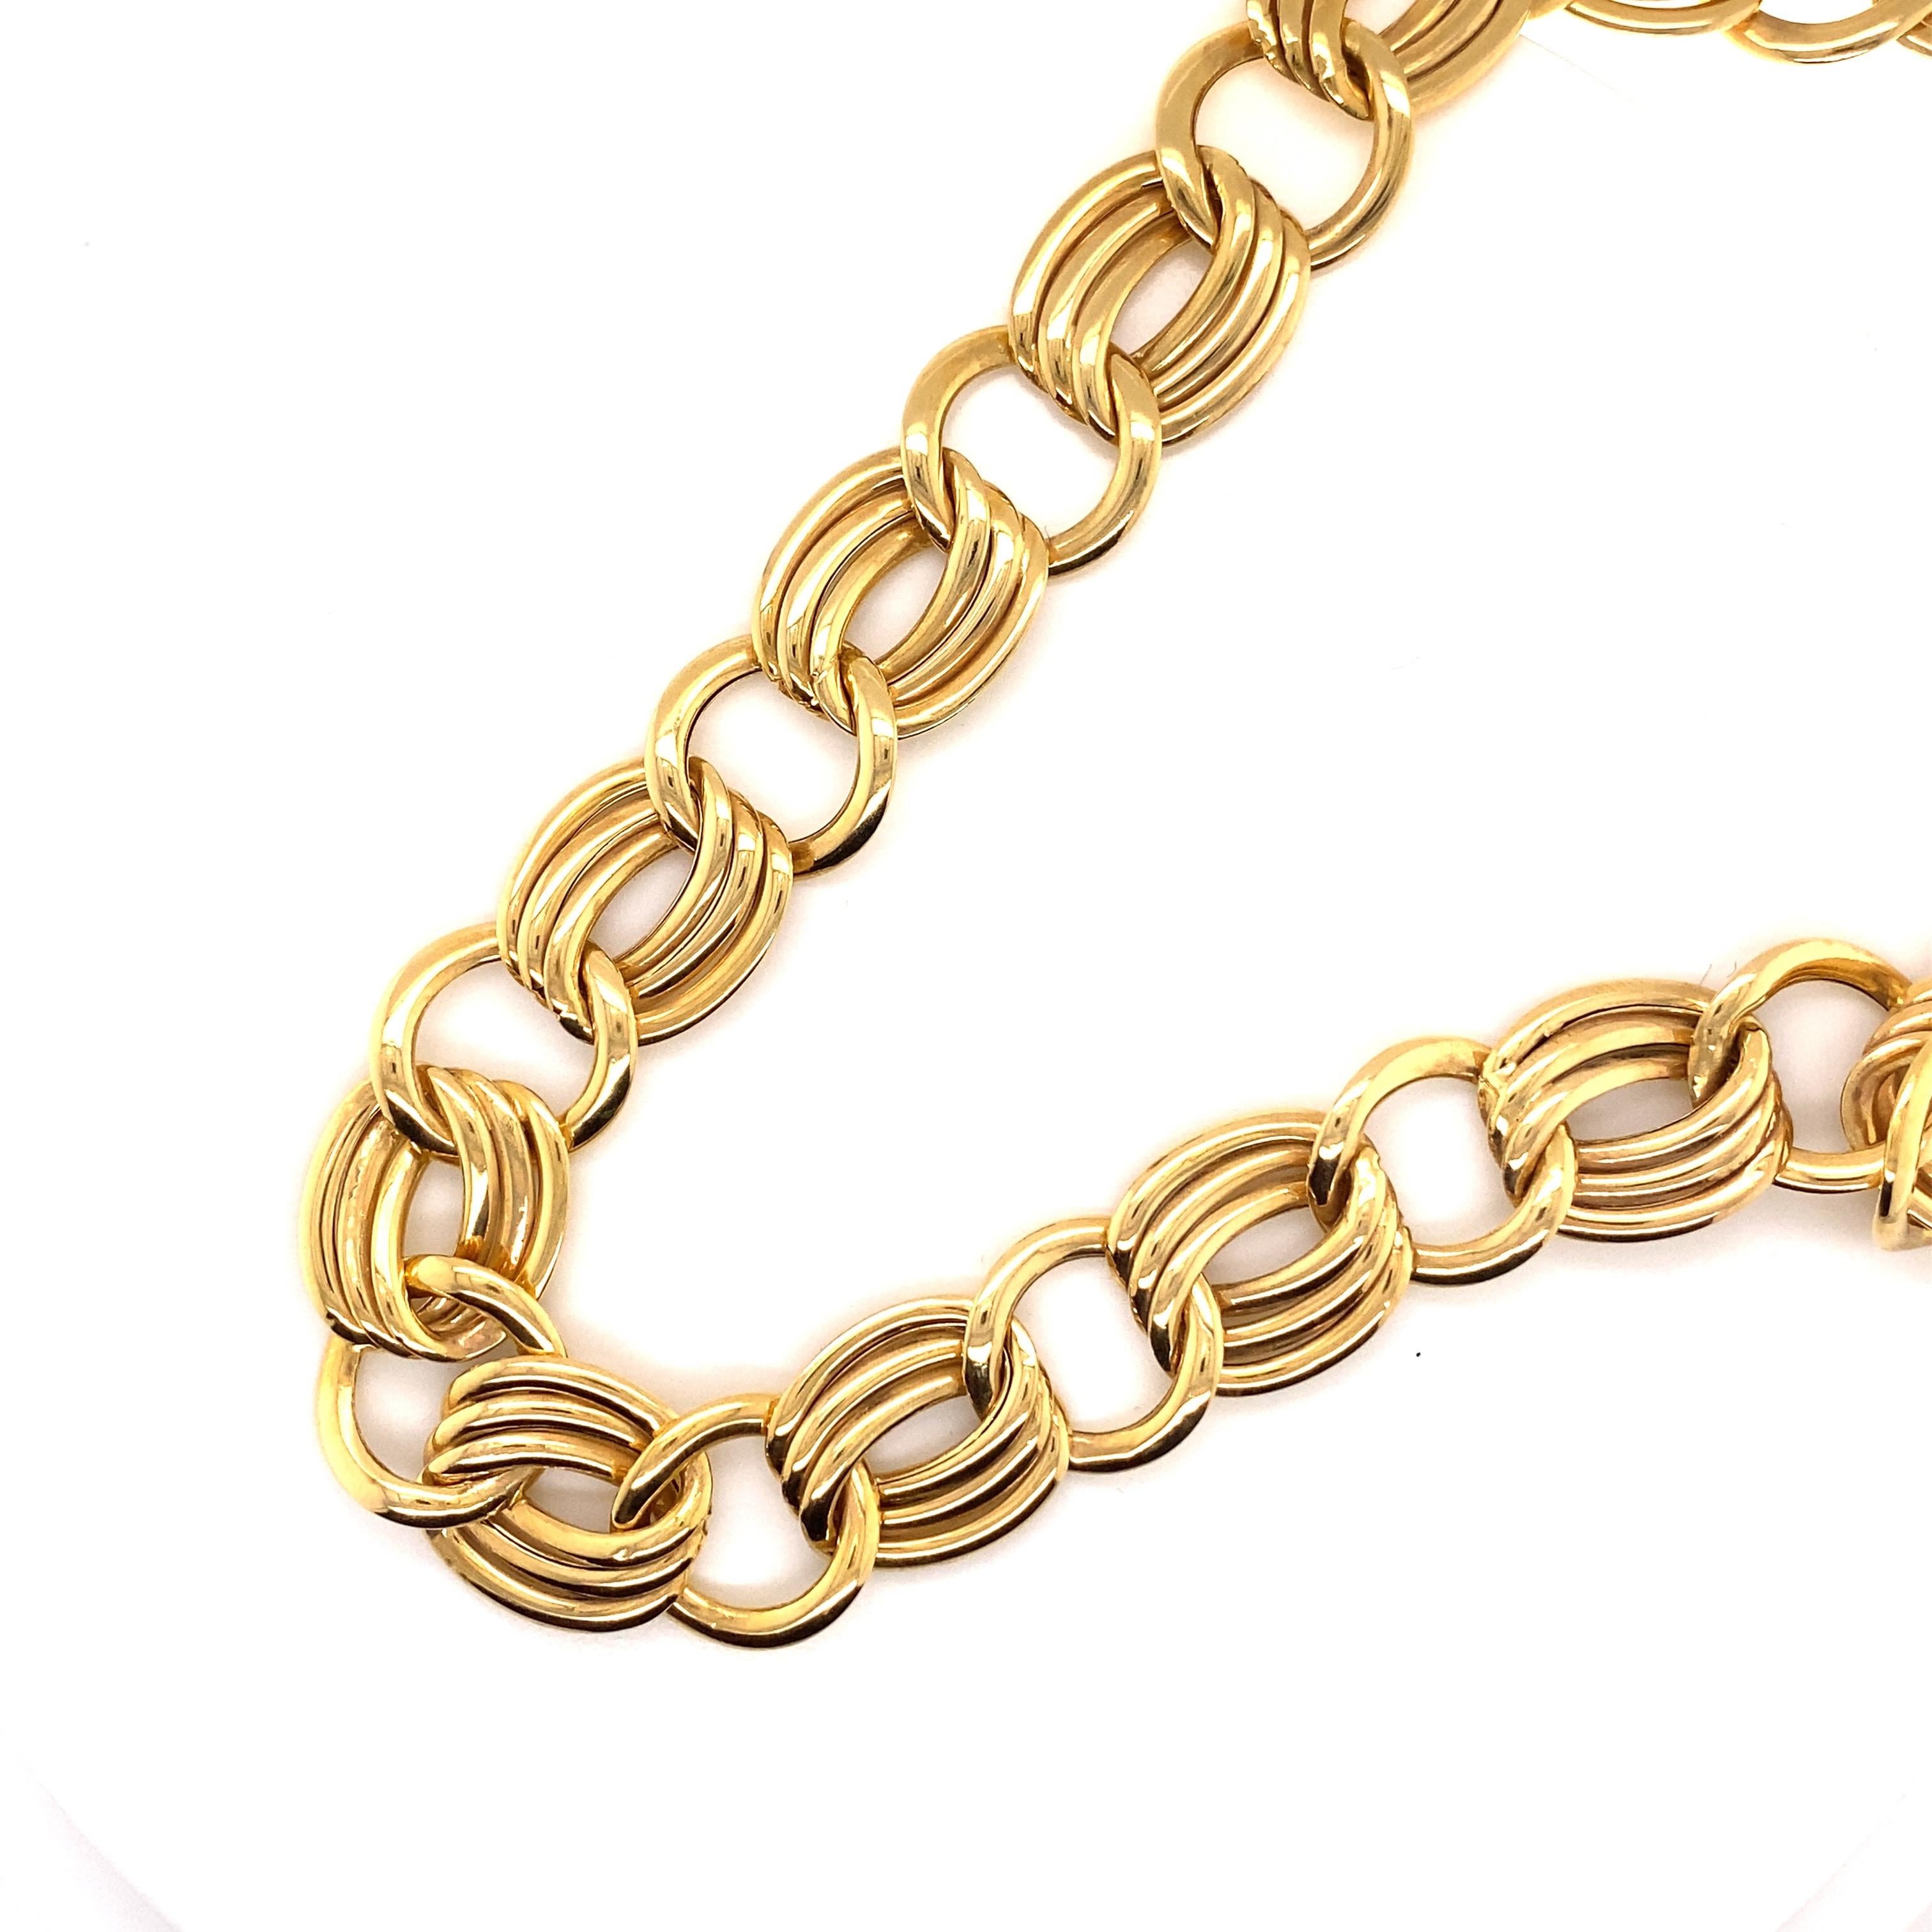 8k gold chain